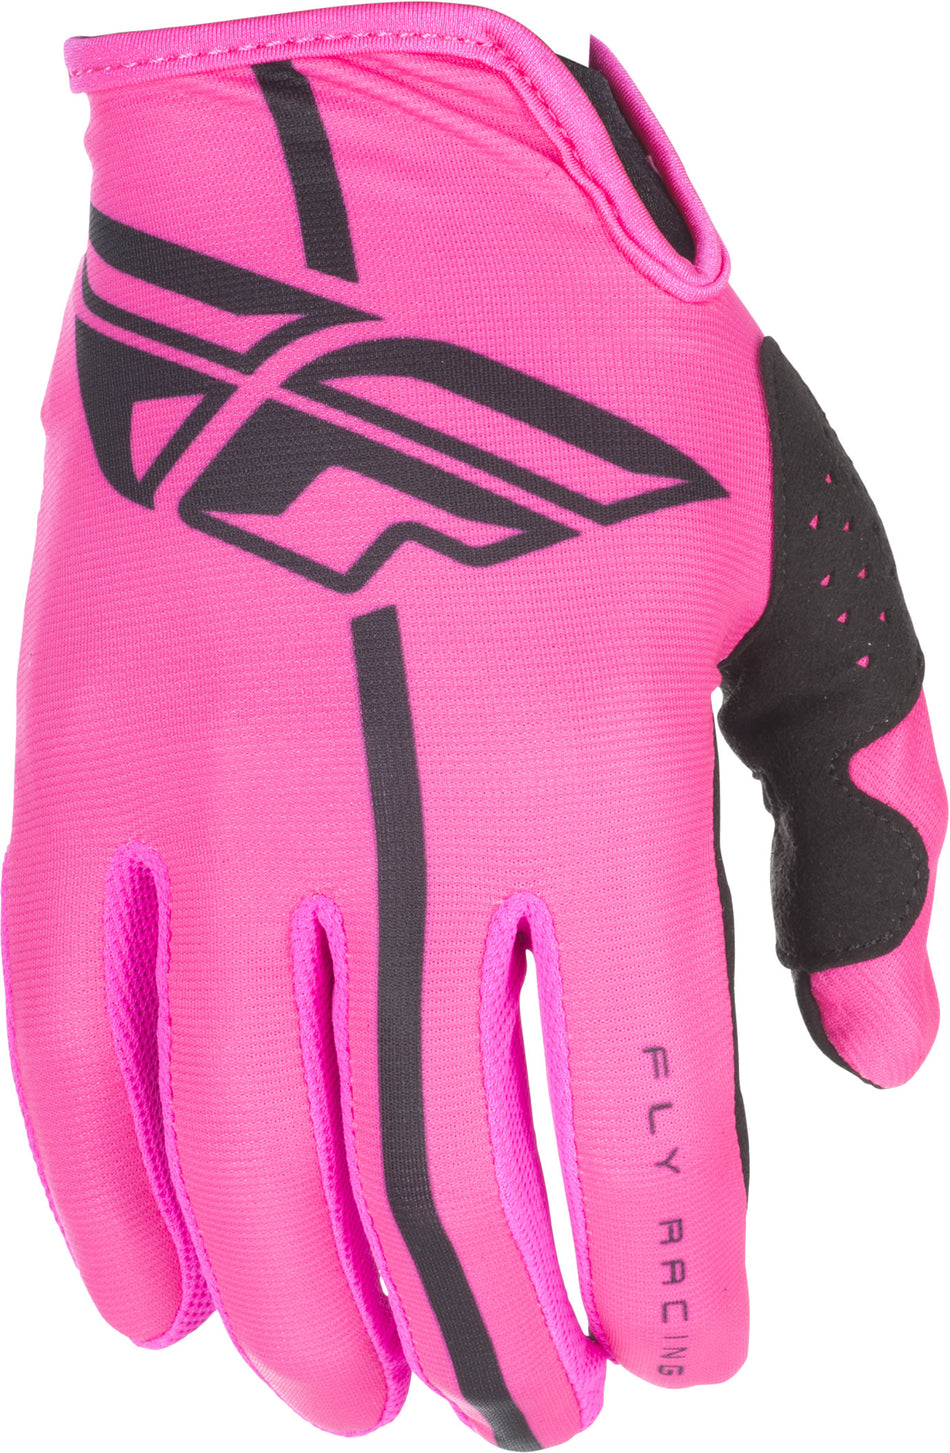 FLY RACING Lite Gloves Neon Pink/Black Sz 5 371-01905